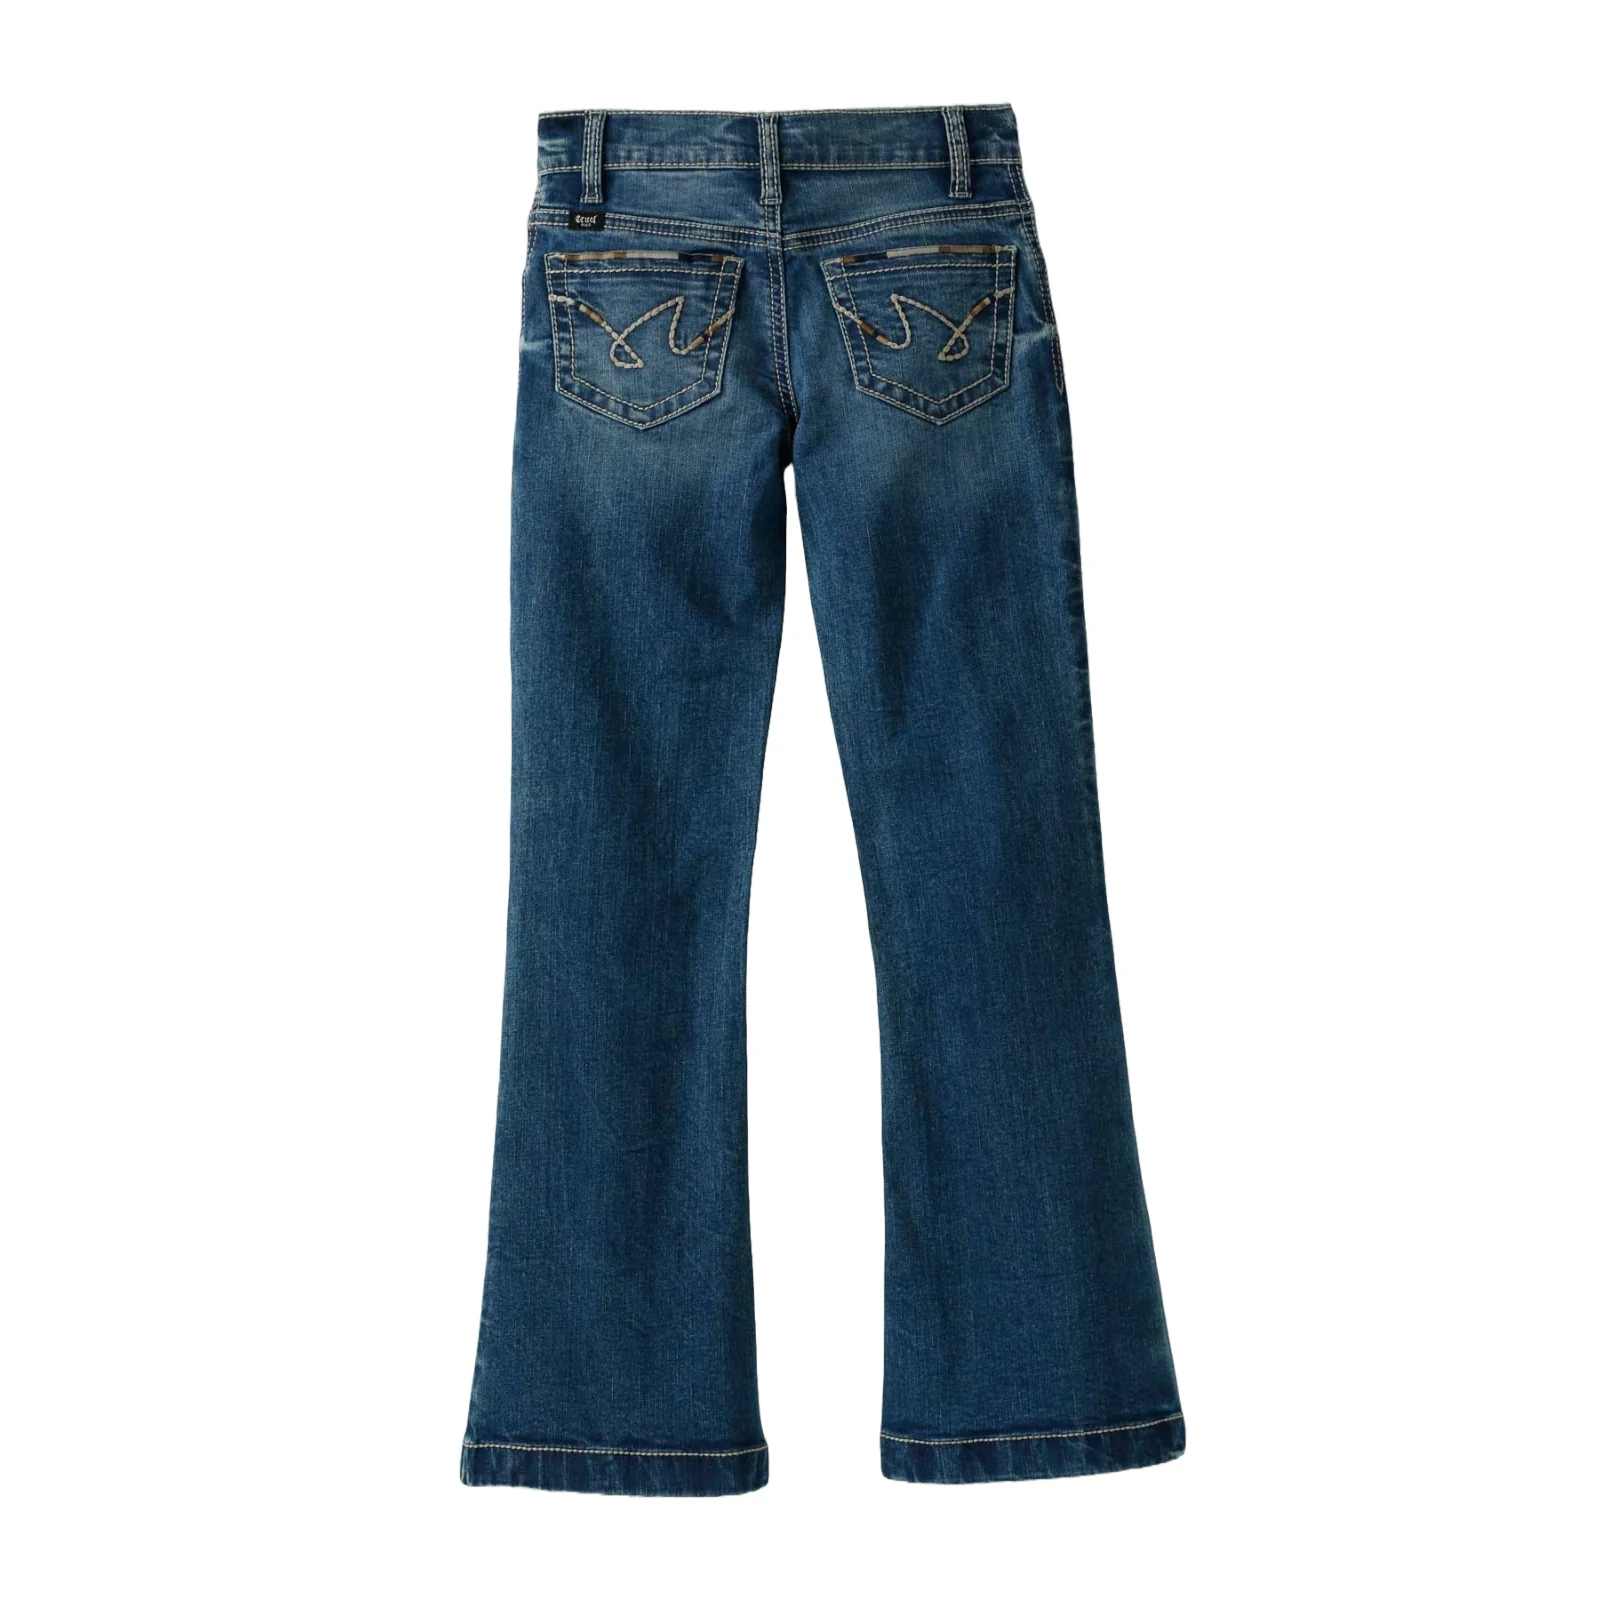 Cinch Girl's Violet Medium Stone Wash Denim Jeans